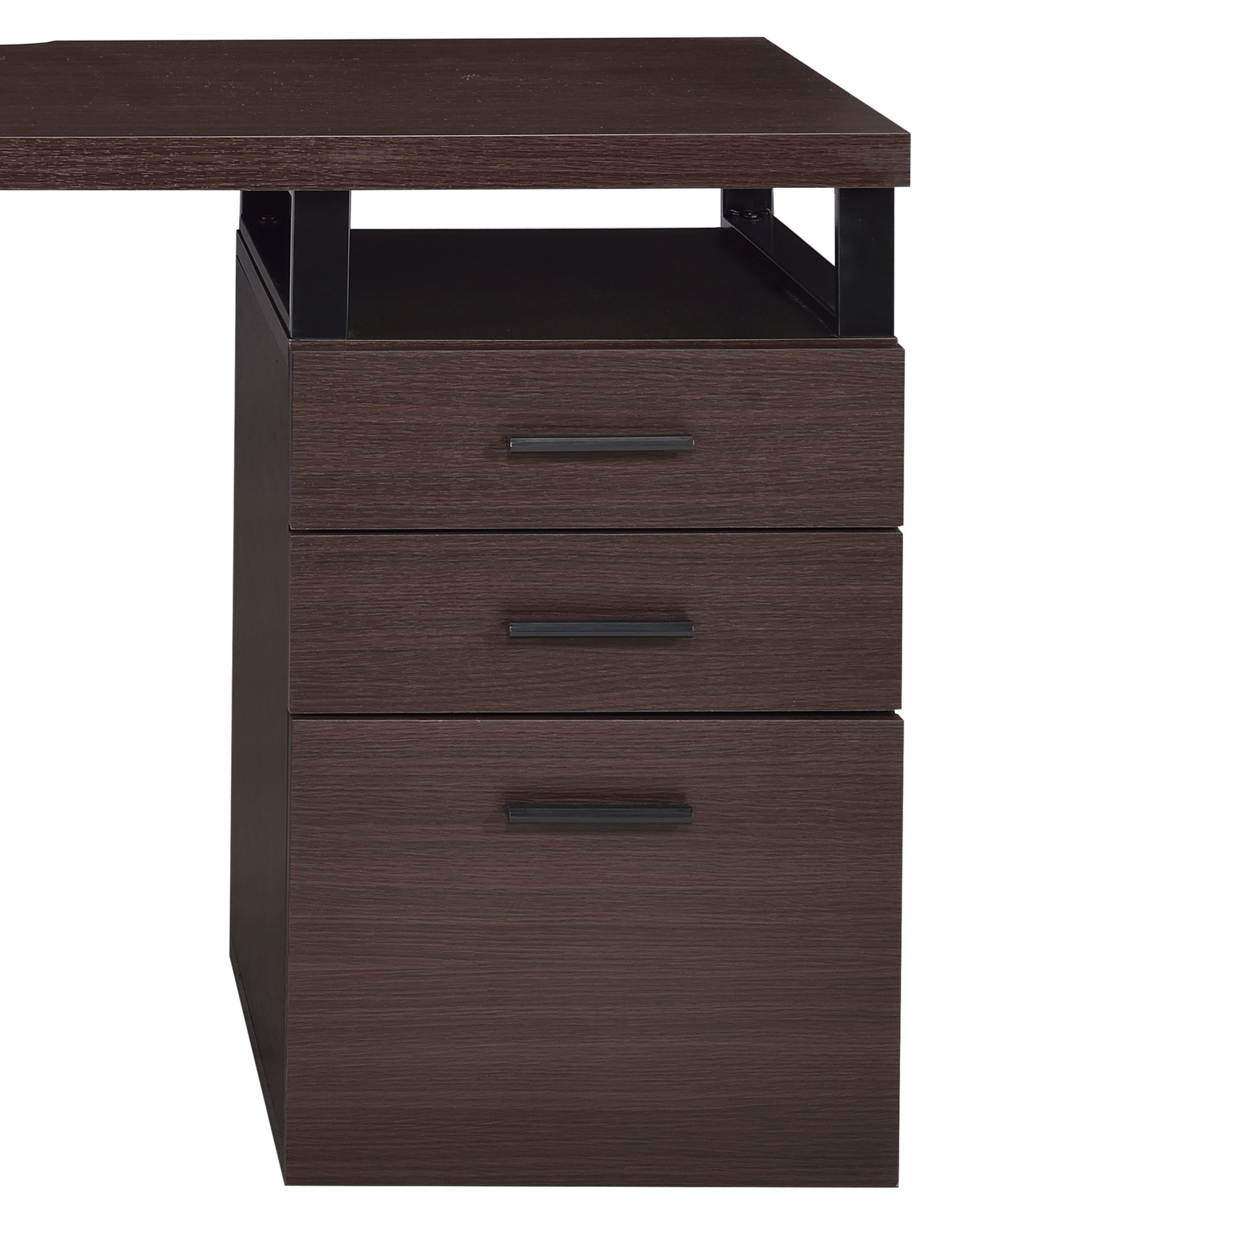 Wooden Writing Desk With Spacious Storage Option, Brown And Black- Saltoro Sherpi